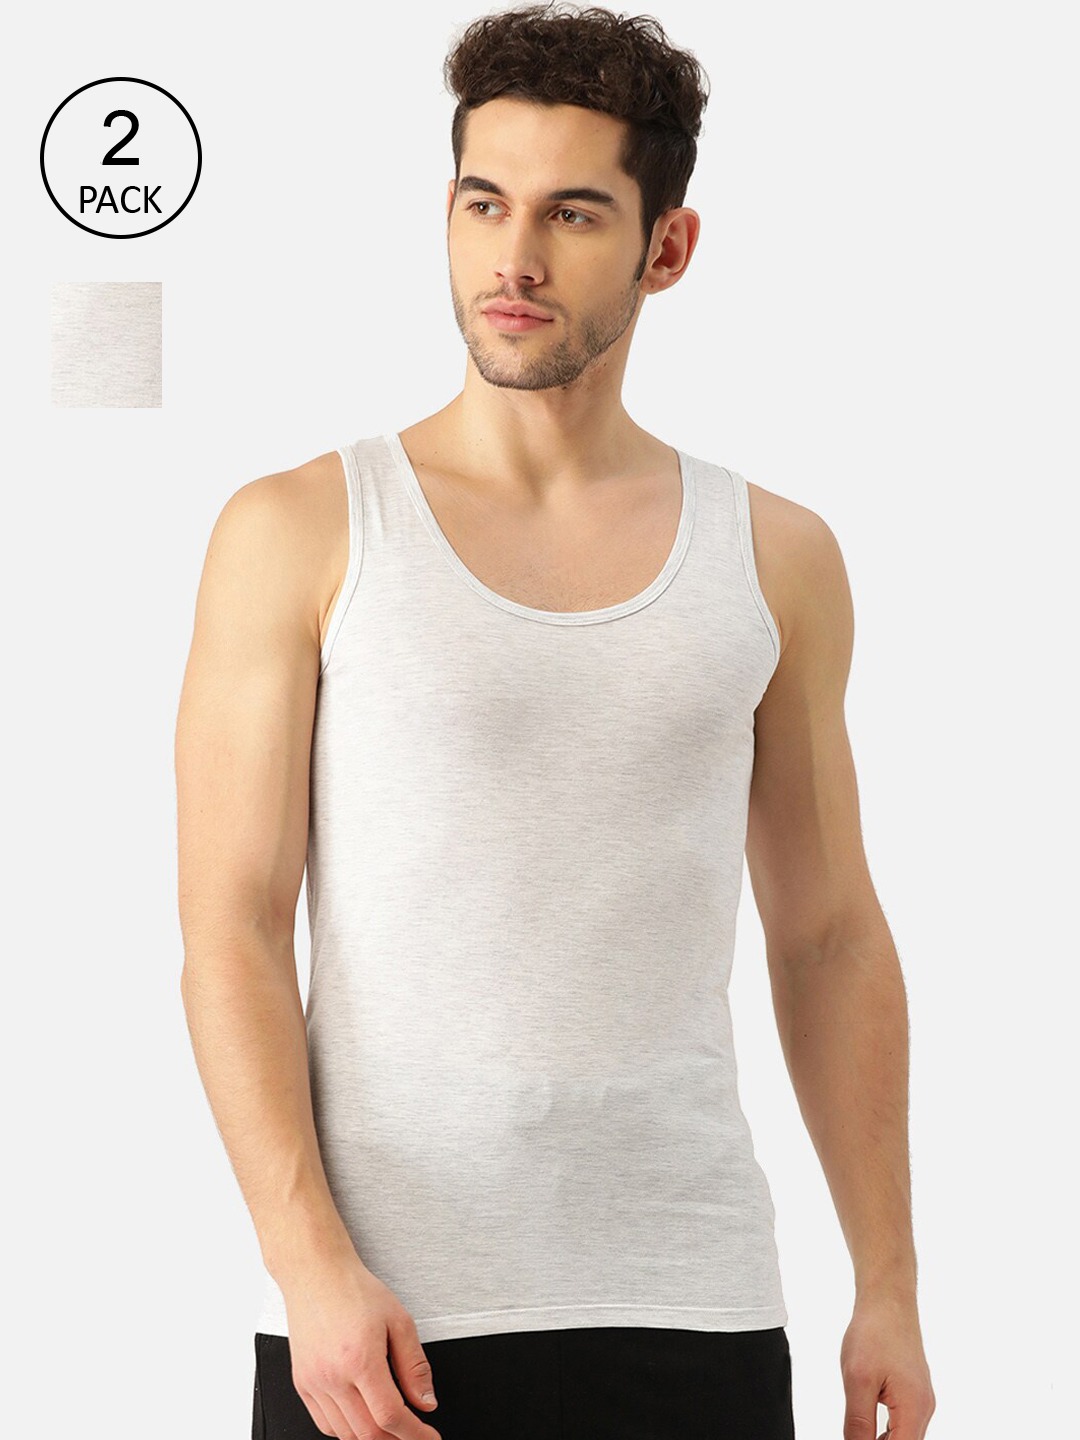 Clothing Innerwear Vests | ROMEO ROSSI Men Grey Pack of 2 Cotton Innerwear Vests - NT61167